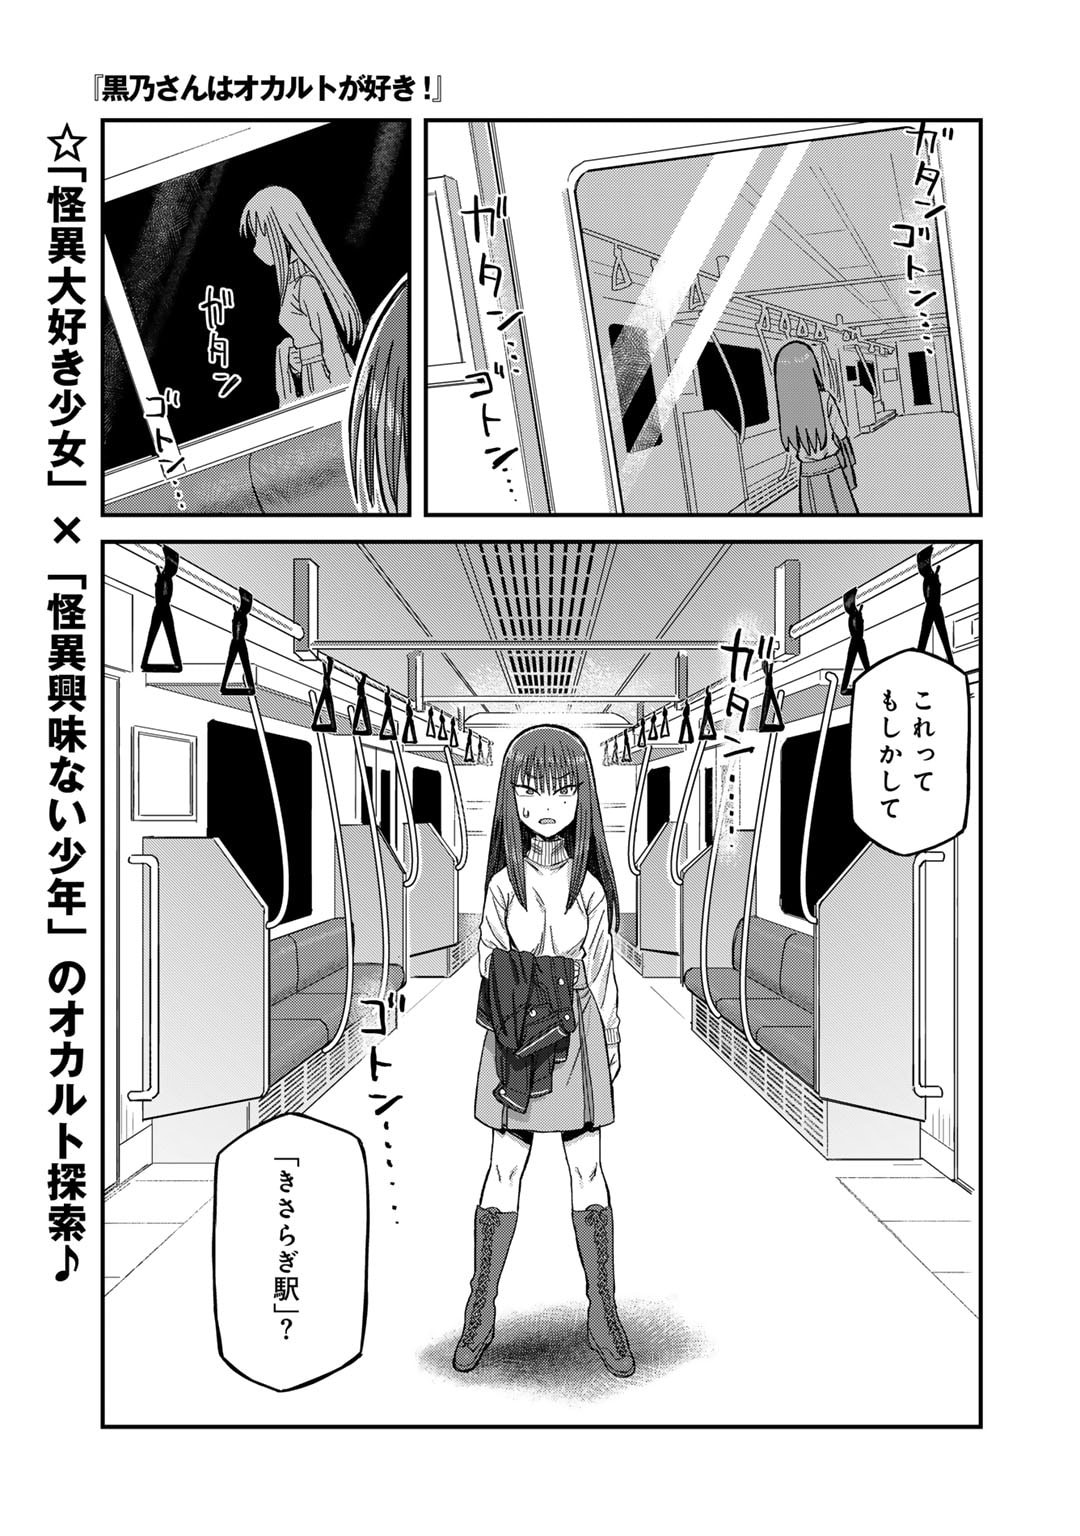 Kurono-san wa Occult ga Suki! - Chapter 4 - Page 1